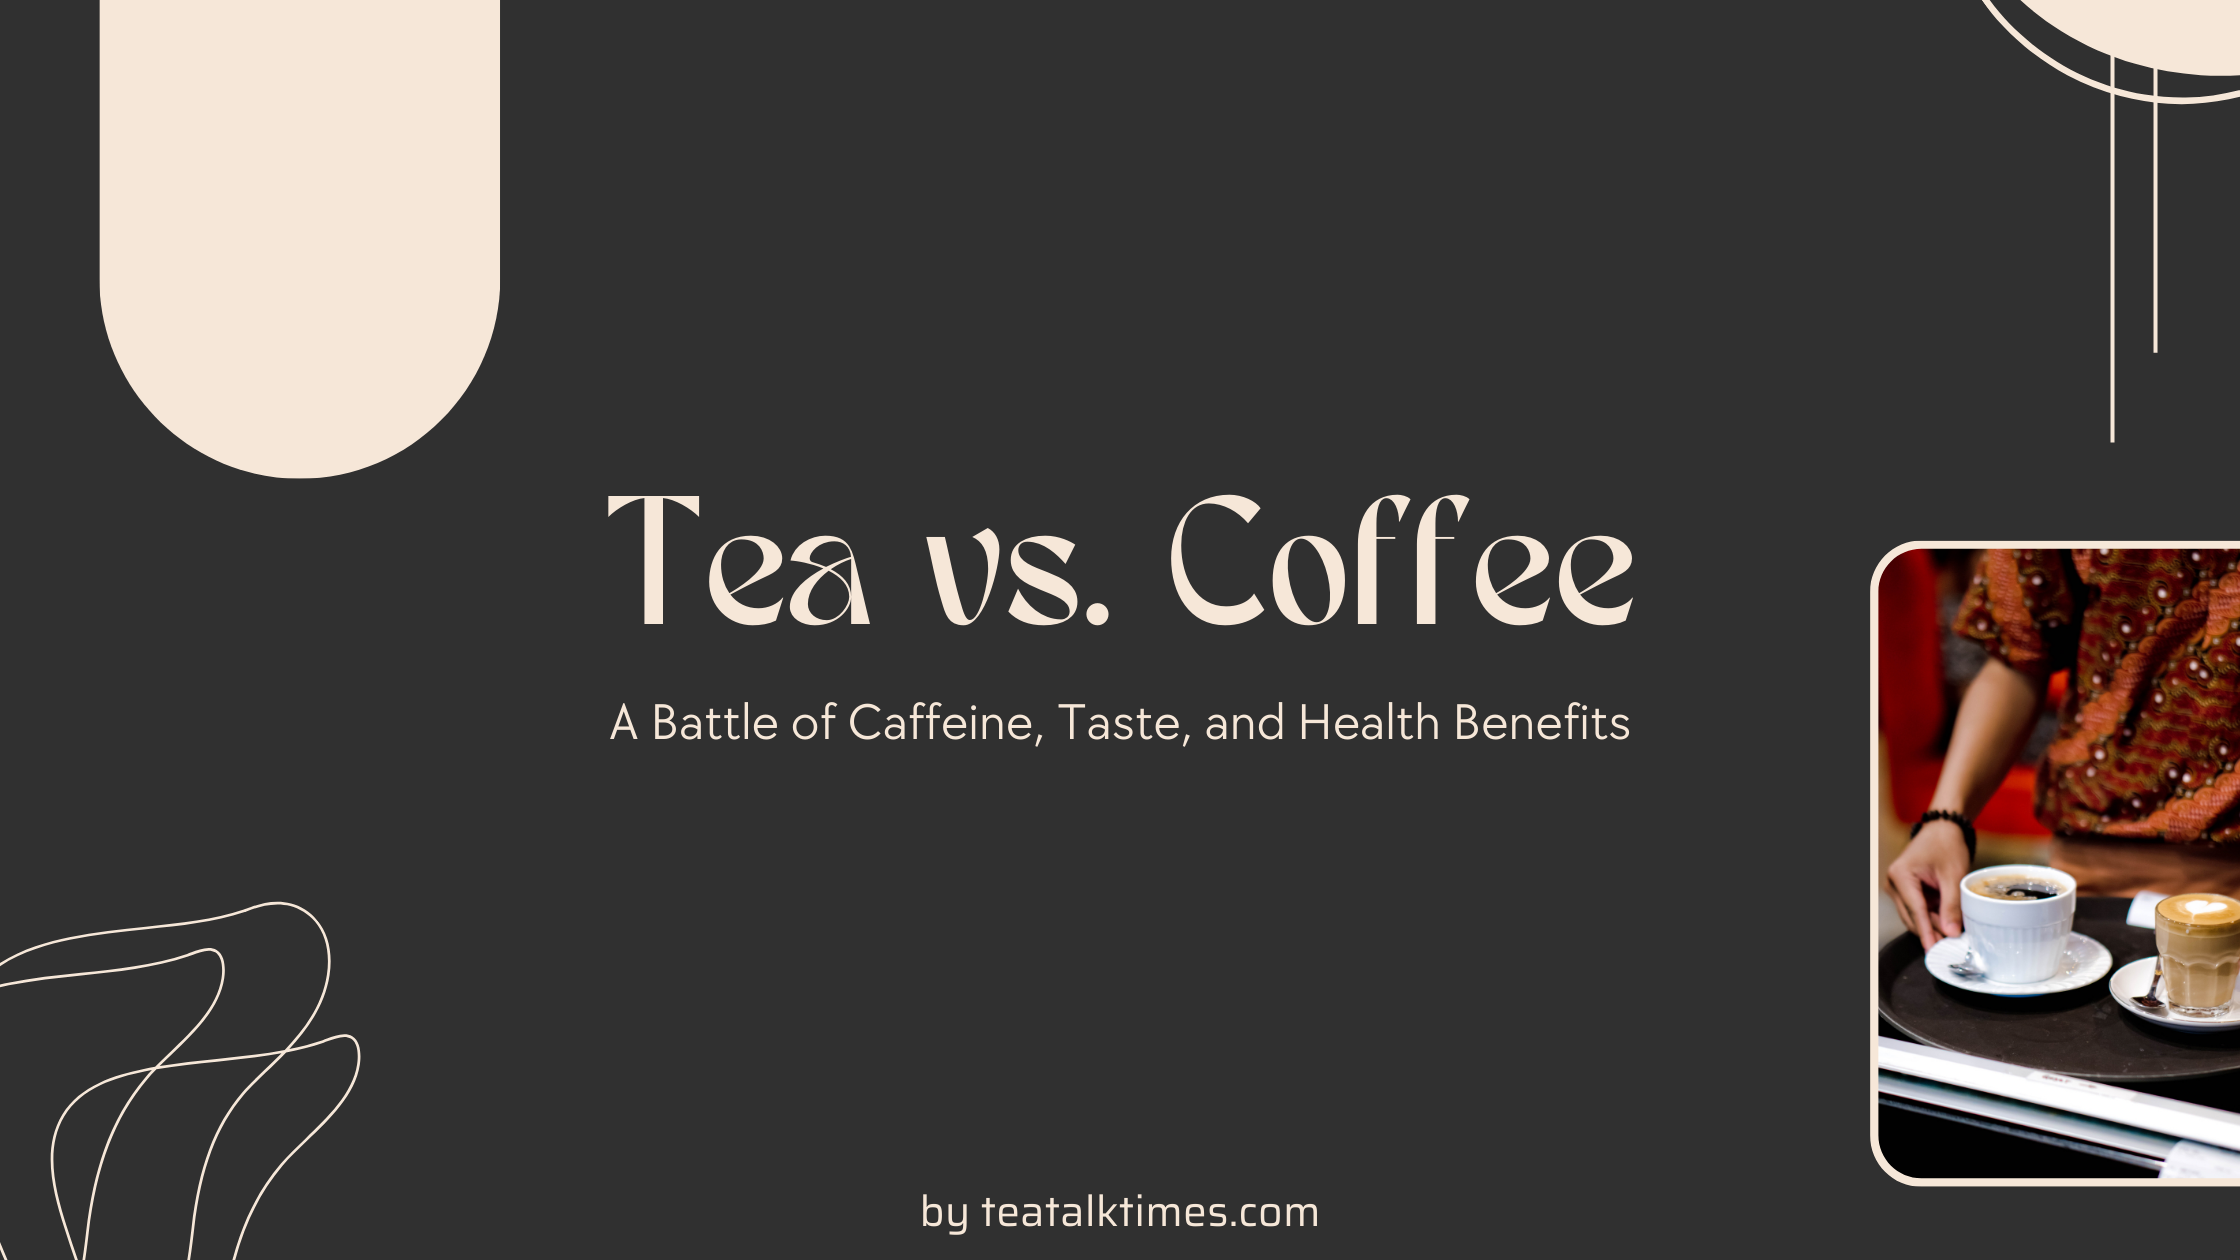 Tea vs. Coffee: A Battle of Caffeine, Taste, and Health Benefits